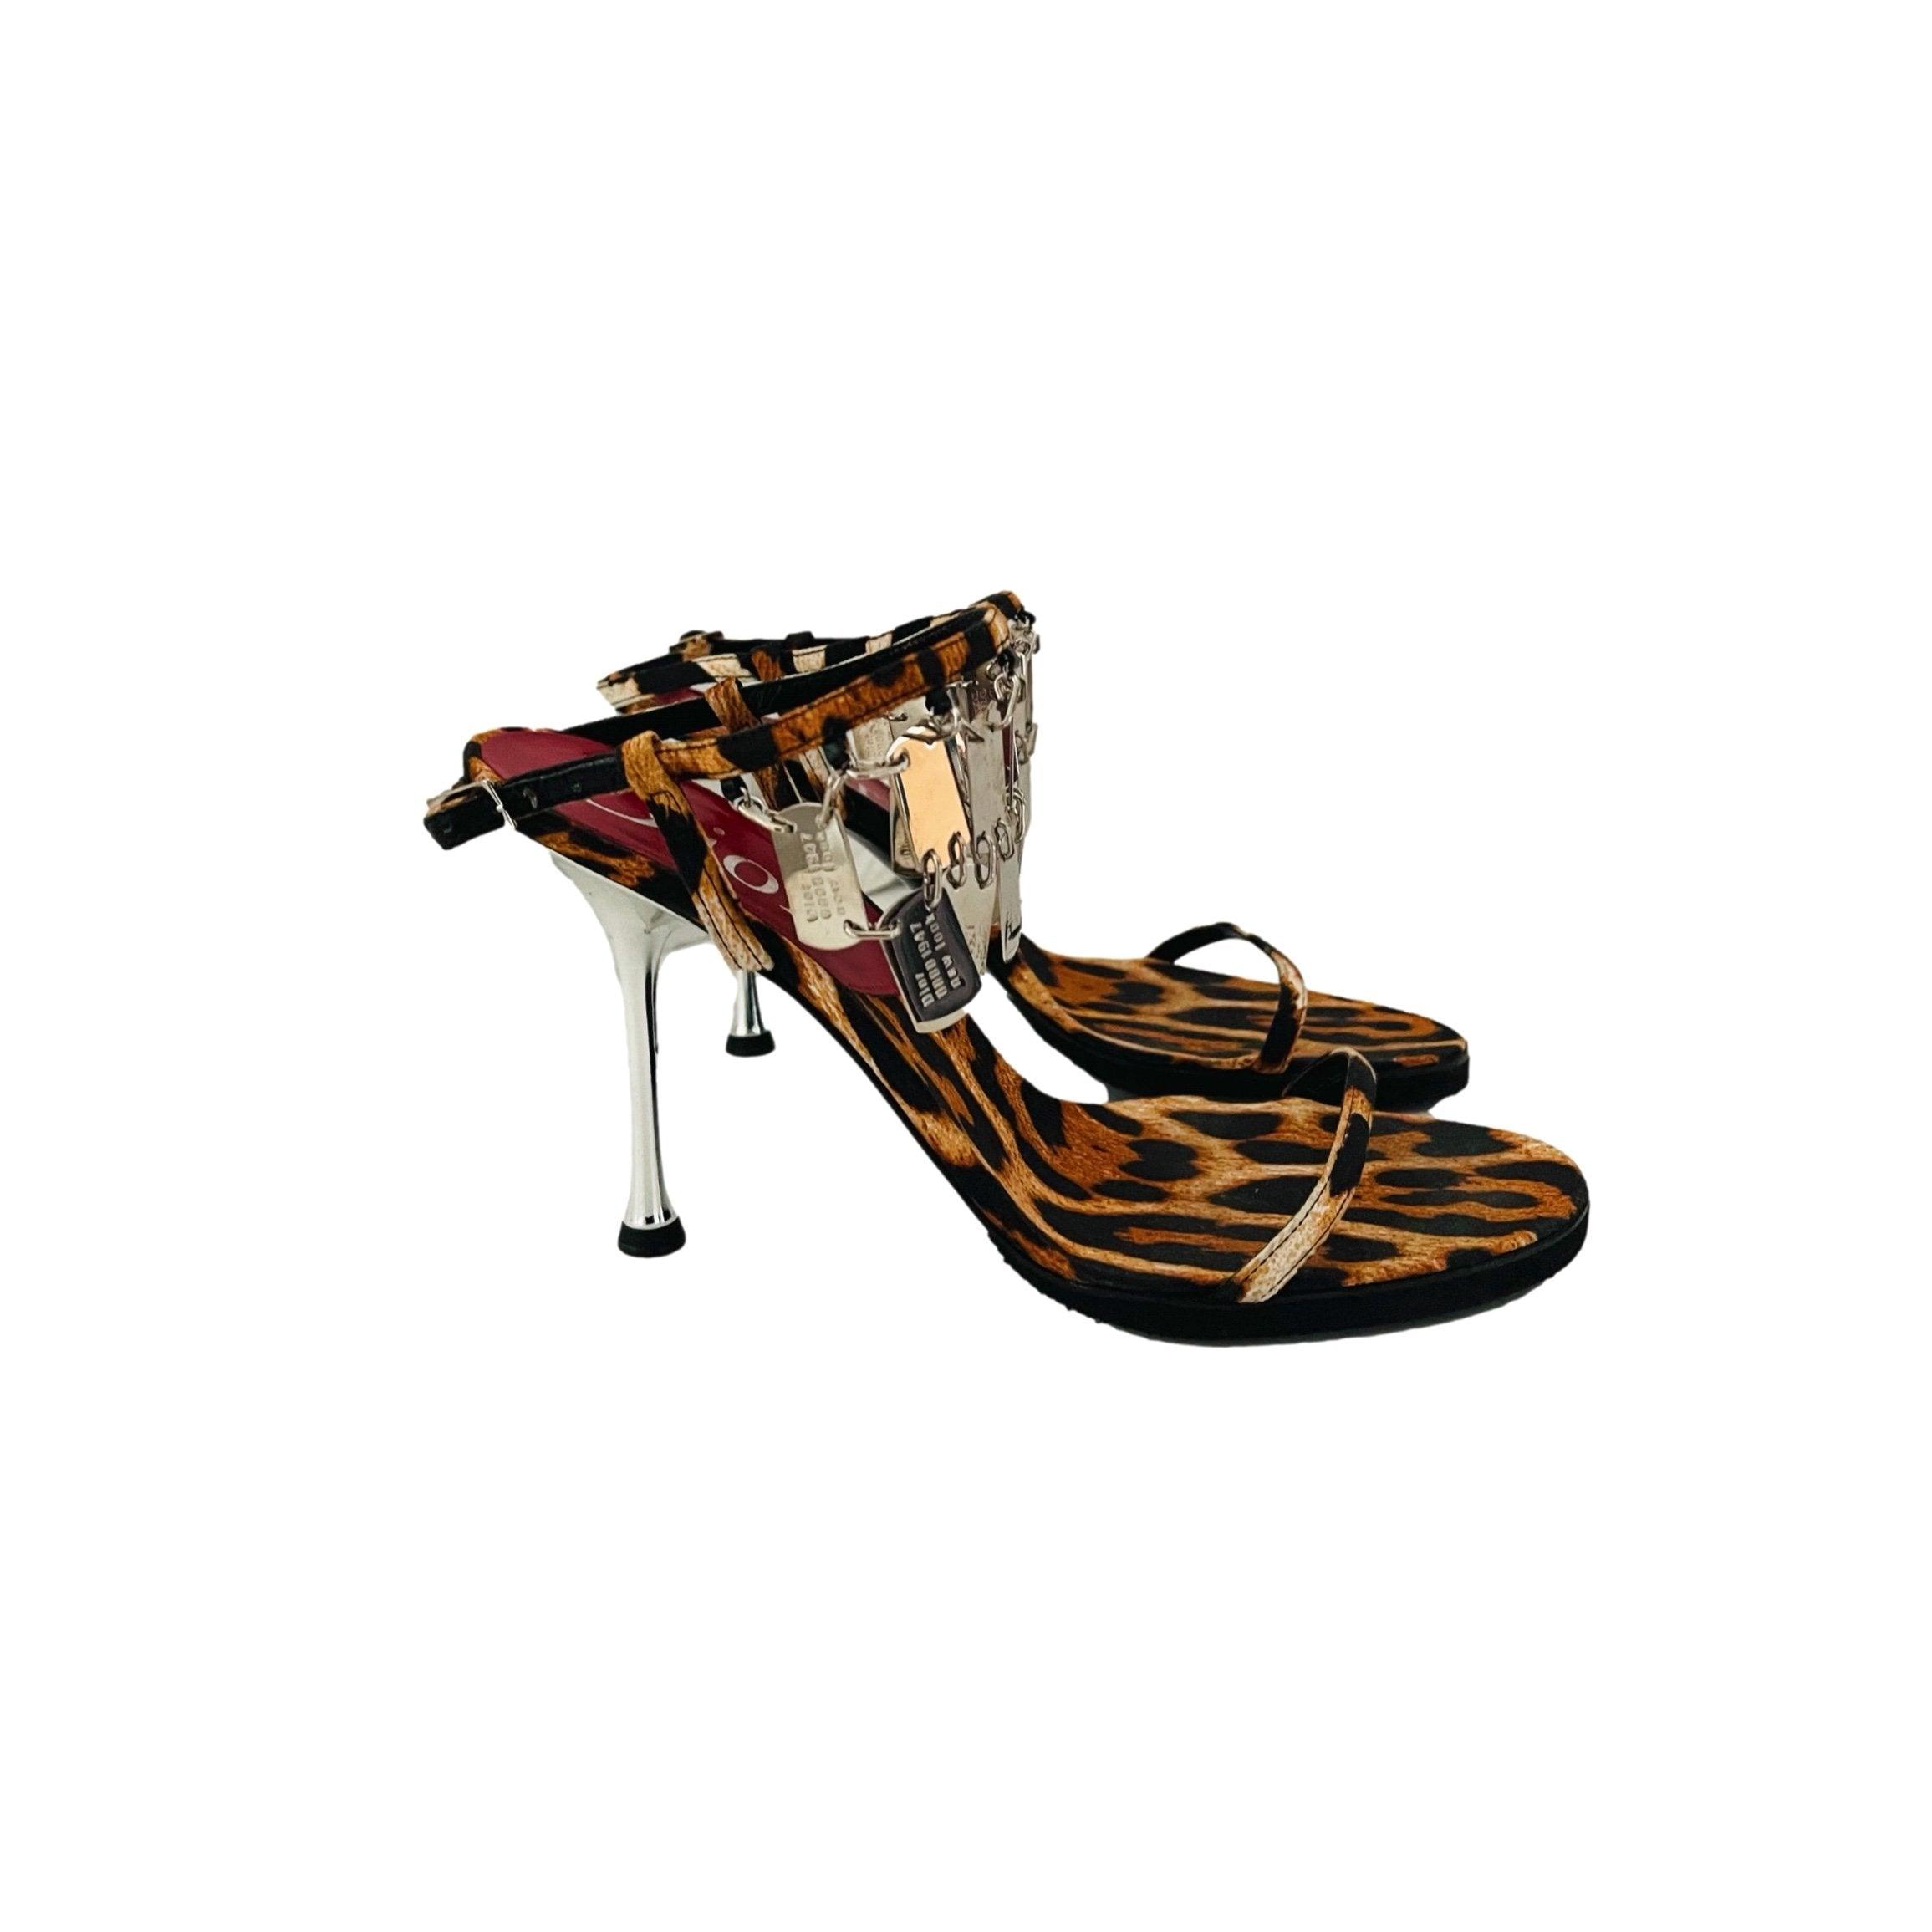 Buy Black Heeled Sandals for Women by AJIO Online | Ajio.com